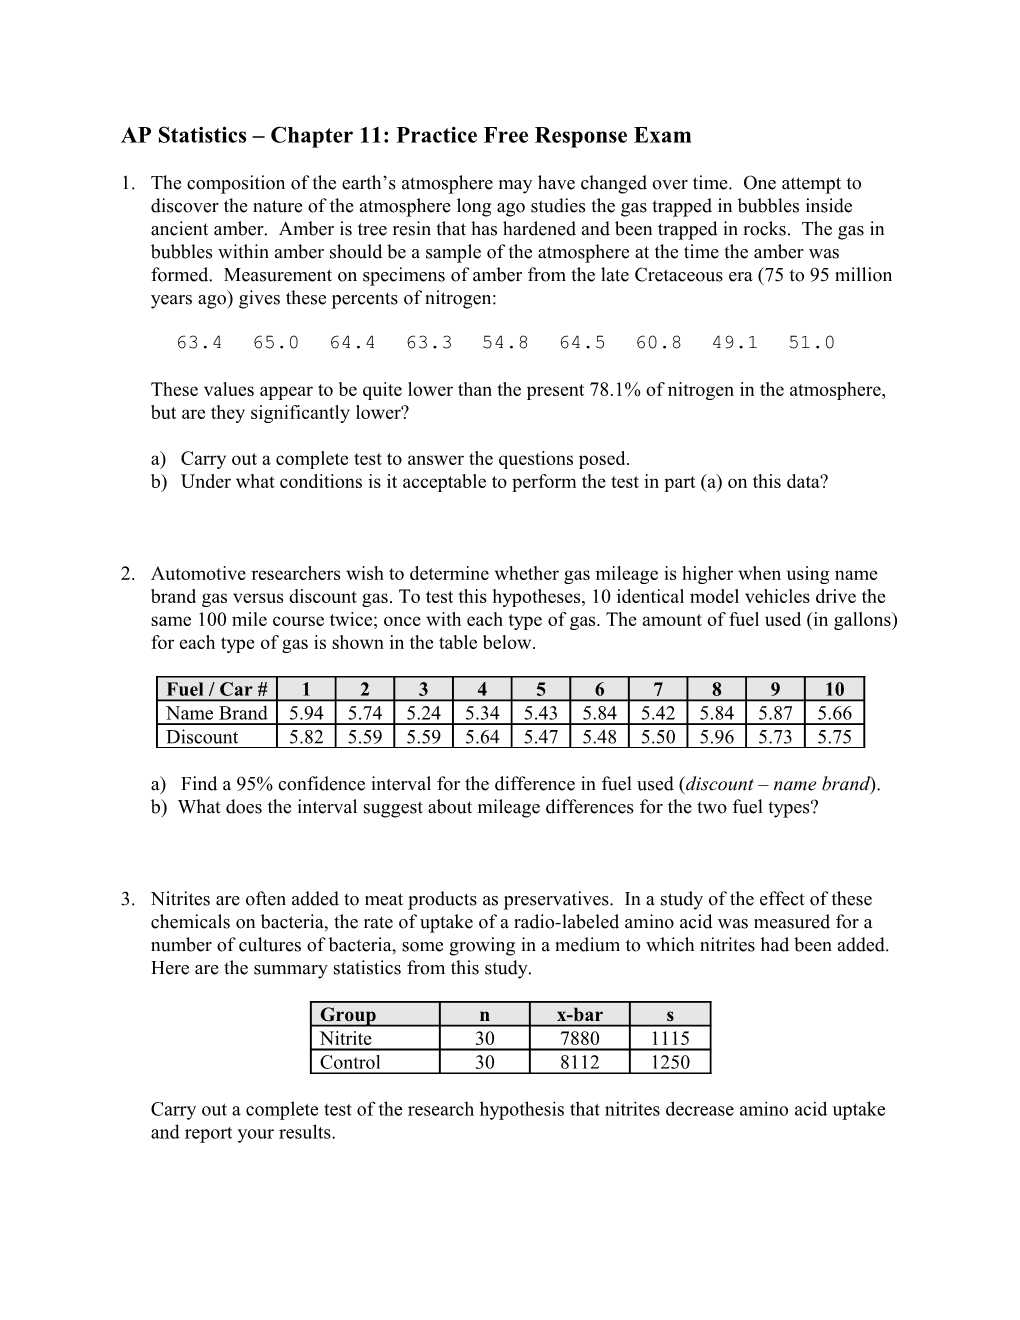 AP Statistics Chapter 11: Practice Free Response Exam